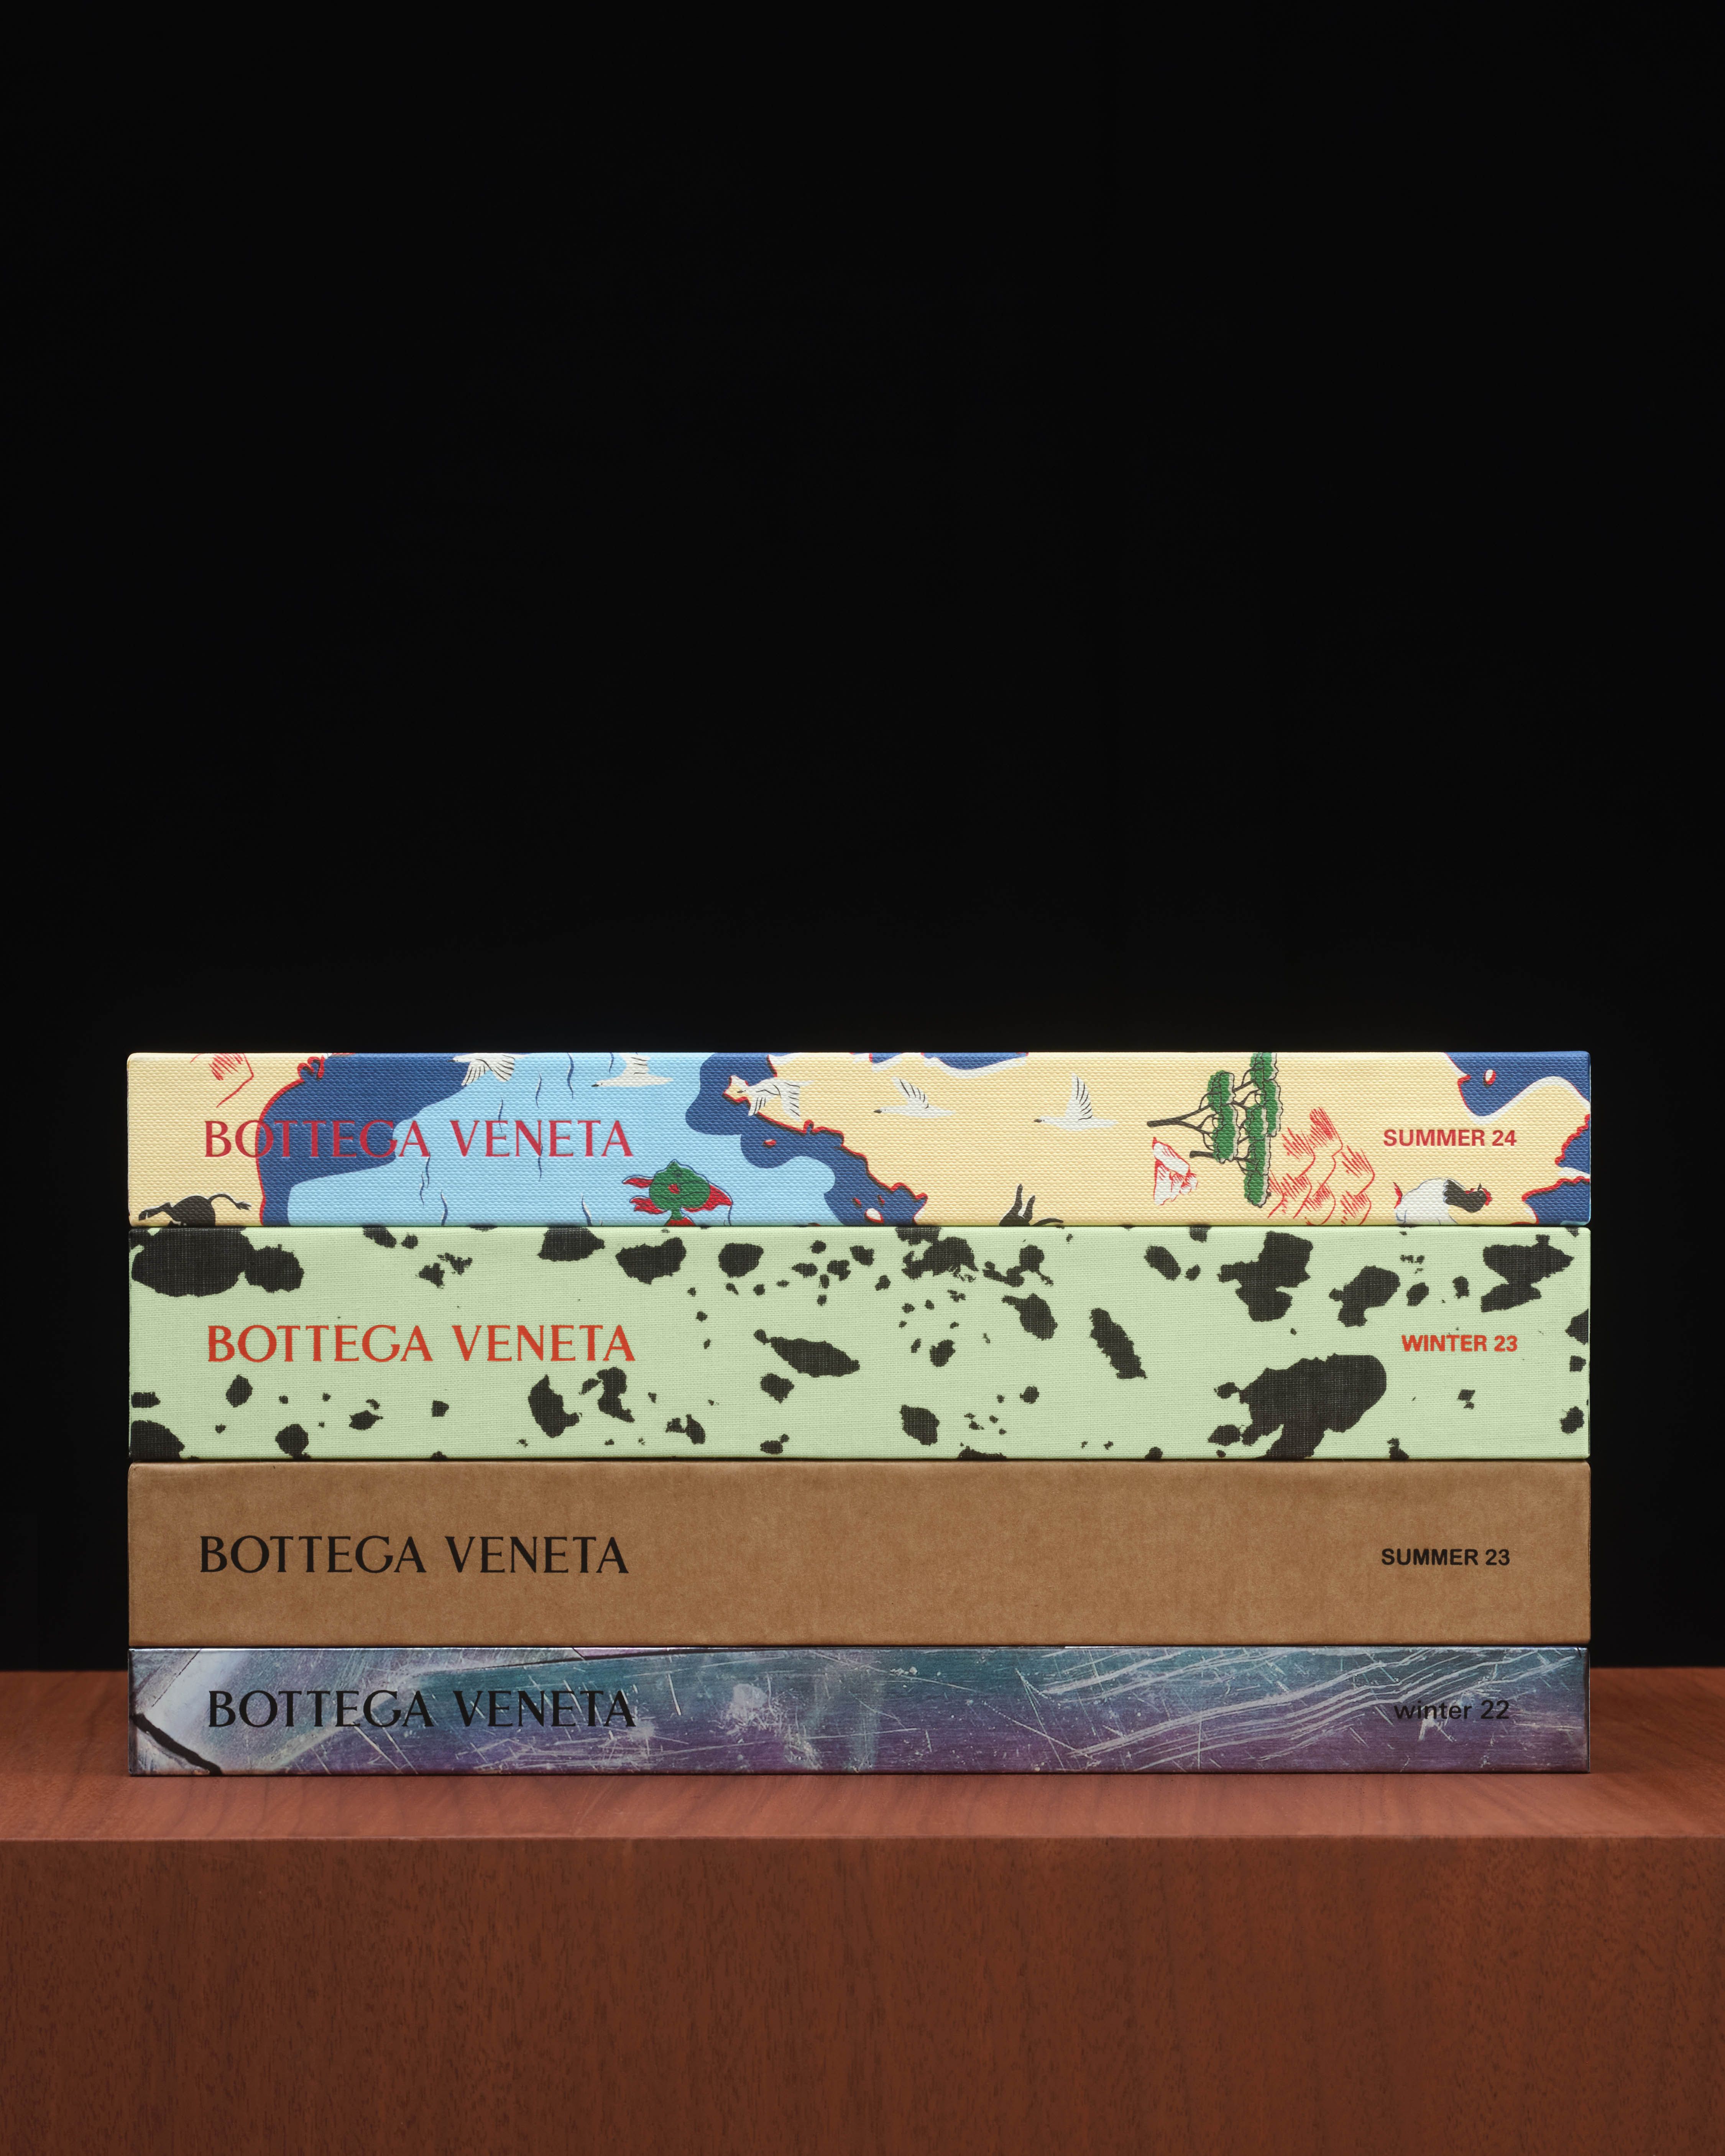 BOTTEGA VENETA发行新一期FANZINE 并于全球多所甄选书店上架呈献